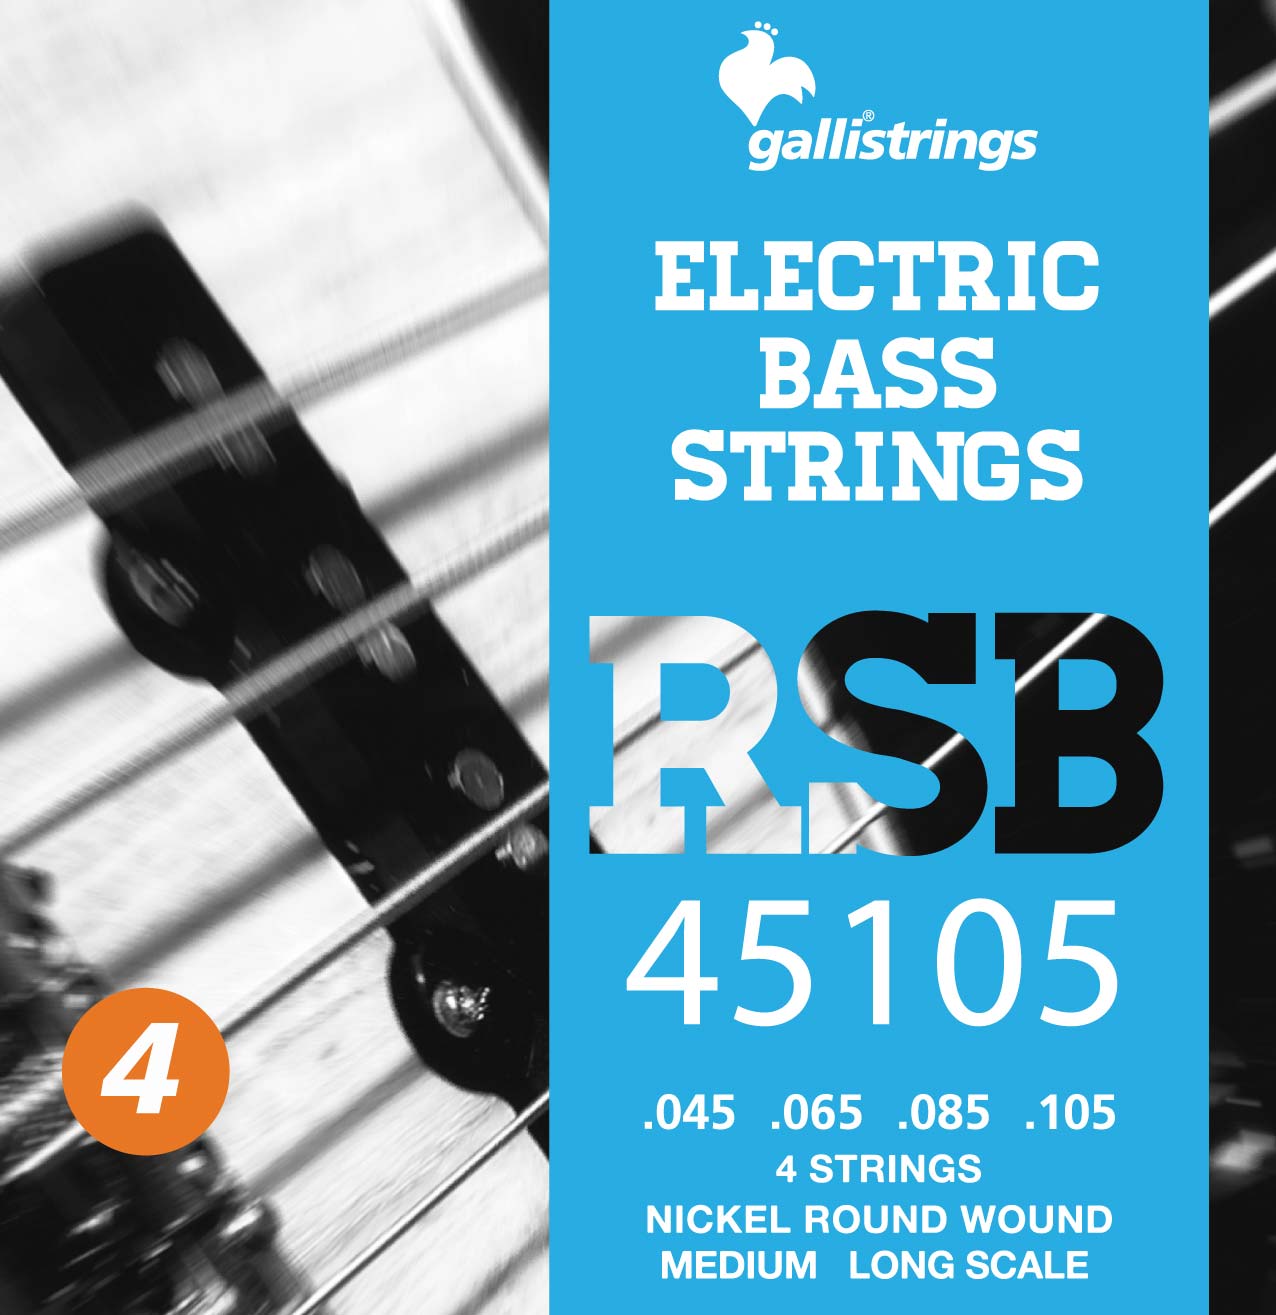 RSB45105  4 strings  Medium